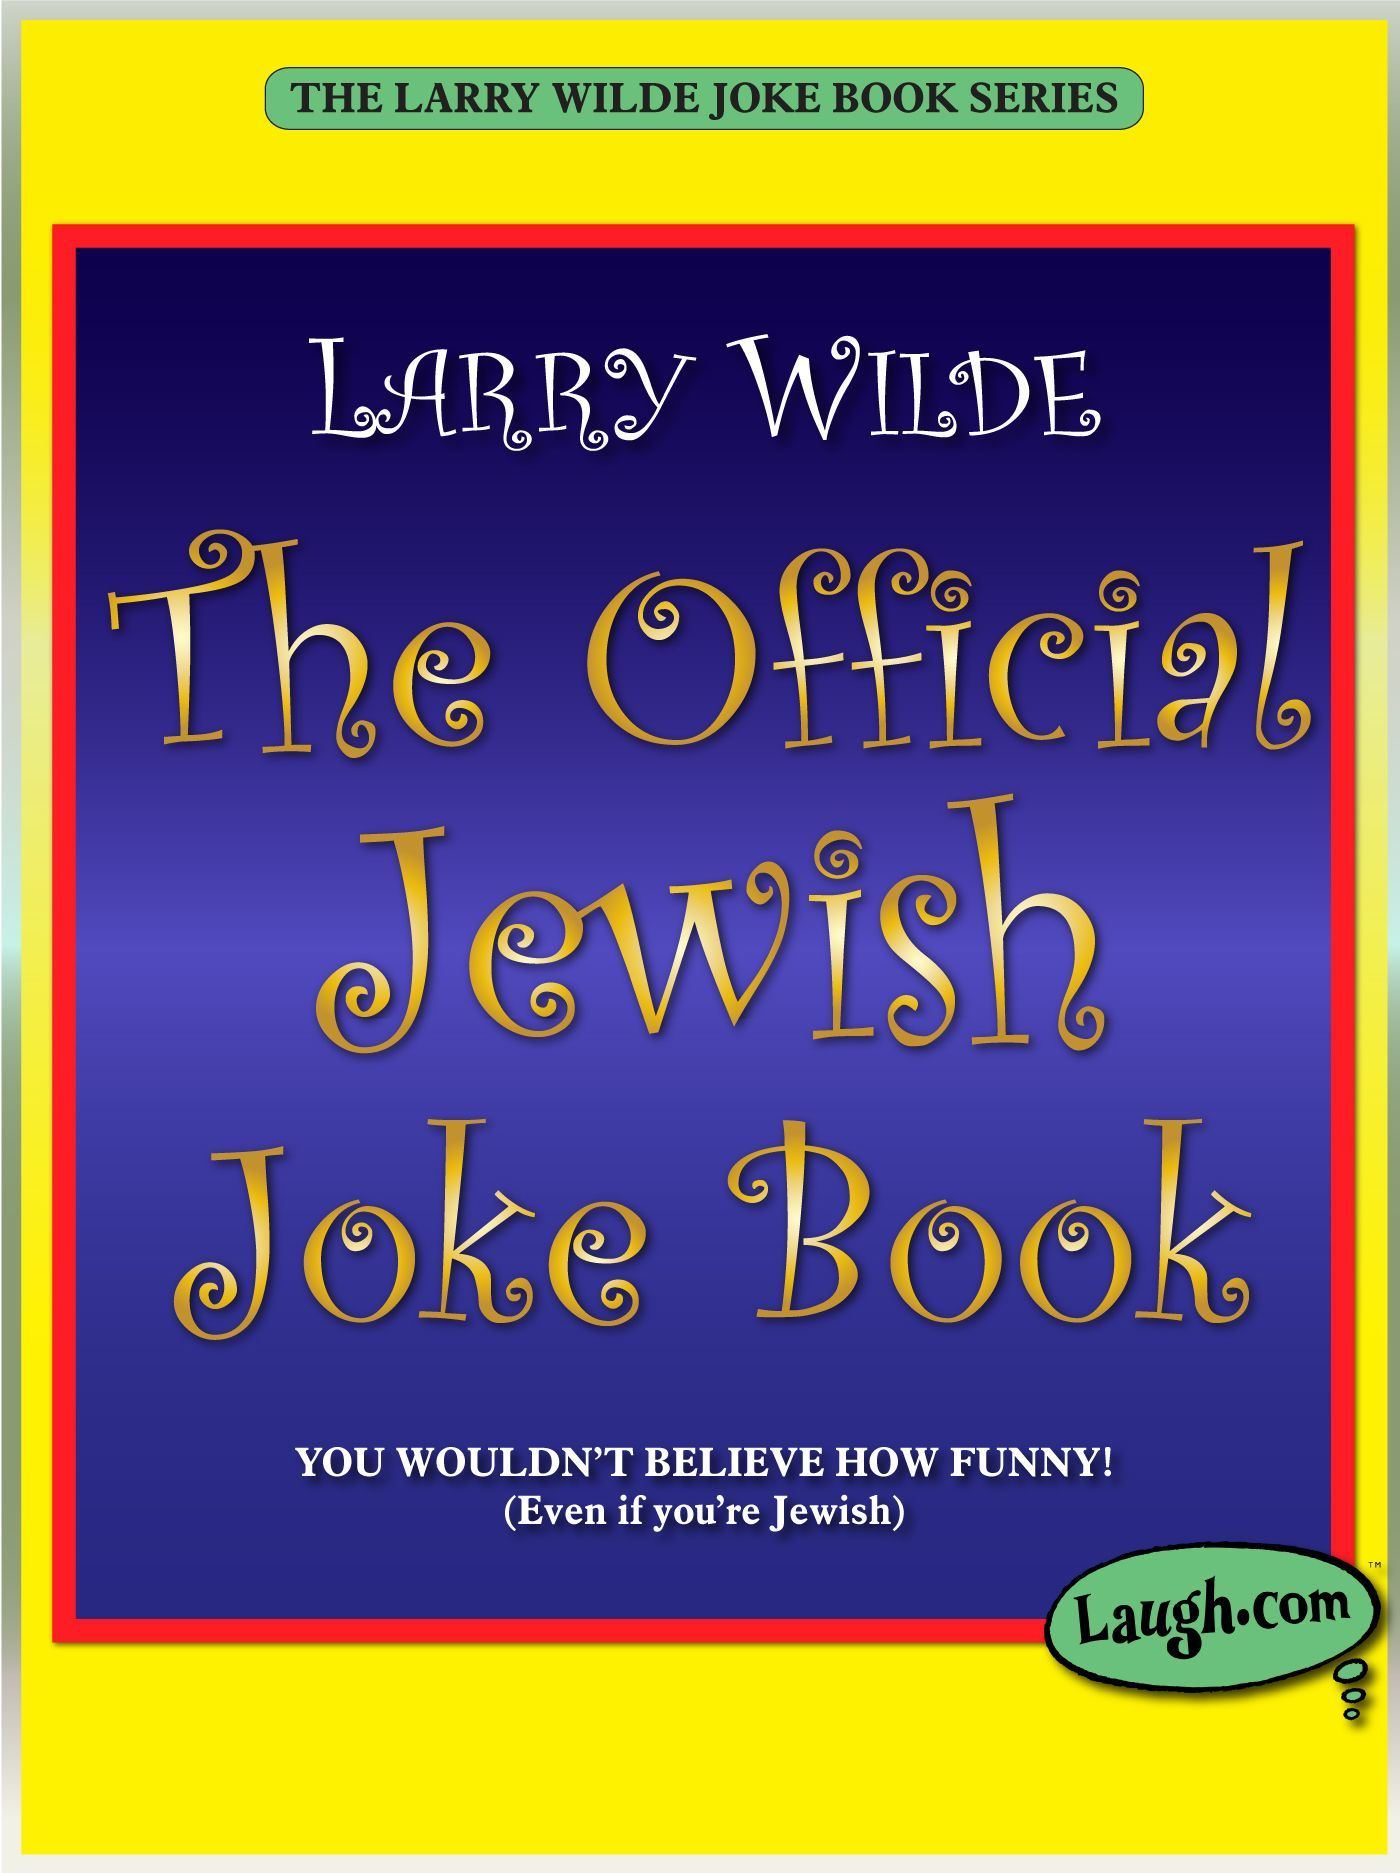 The B. reccomend Jewish irish joke book